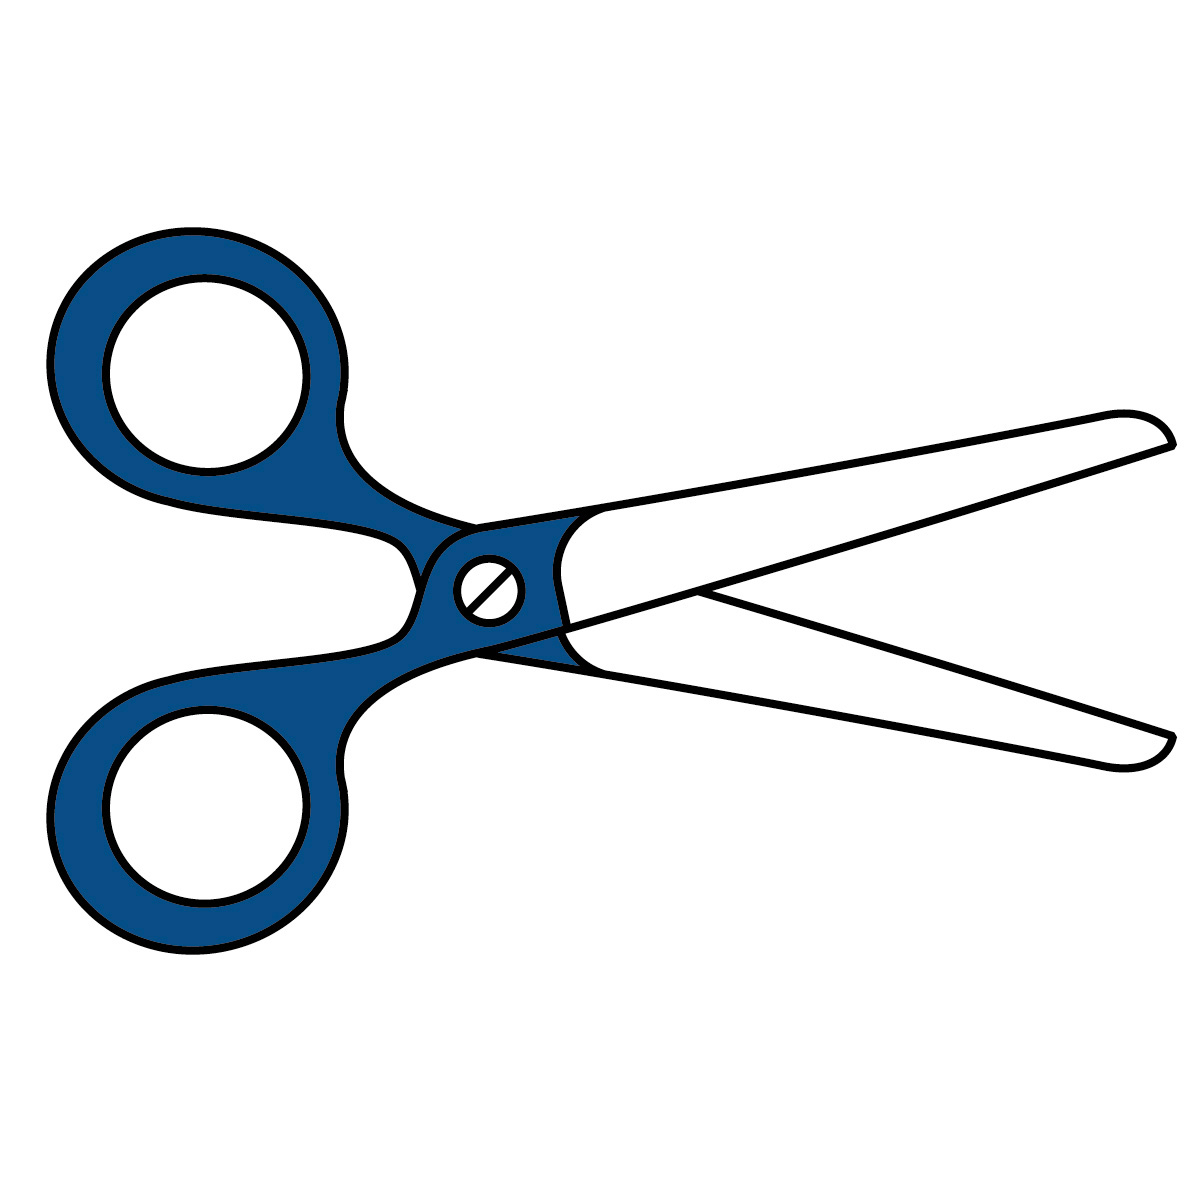 scissors clipart in word - photo #4